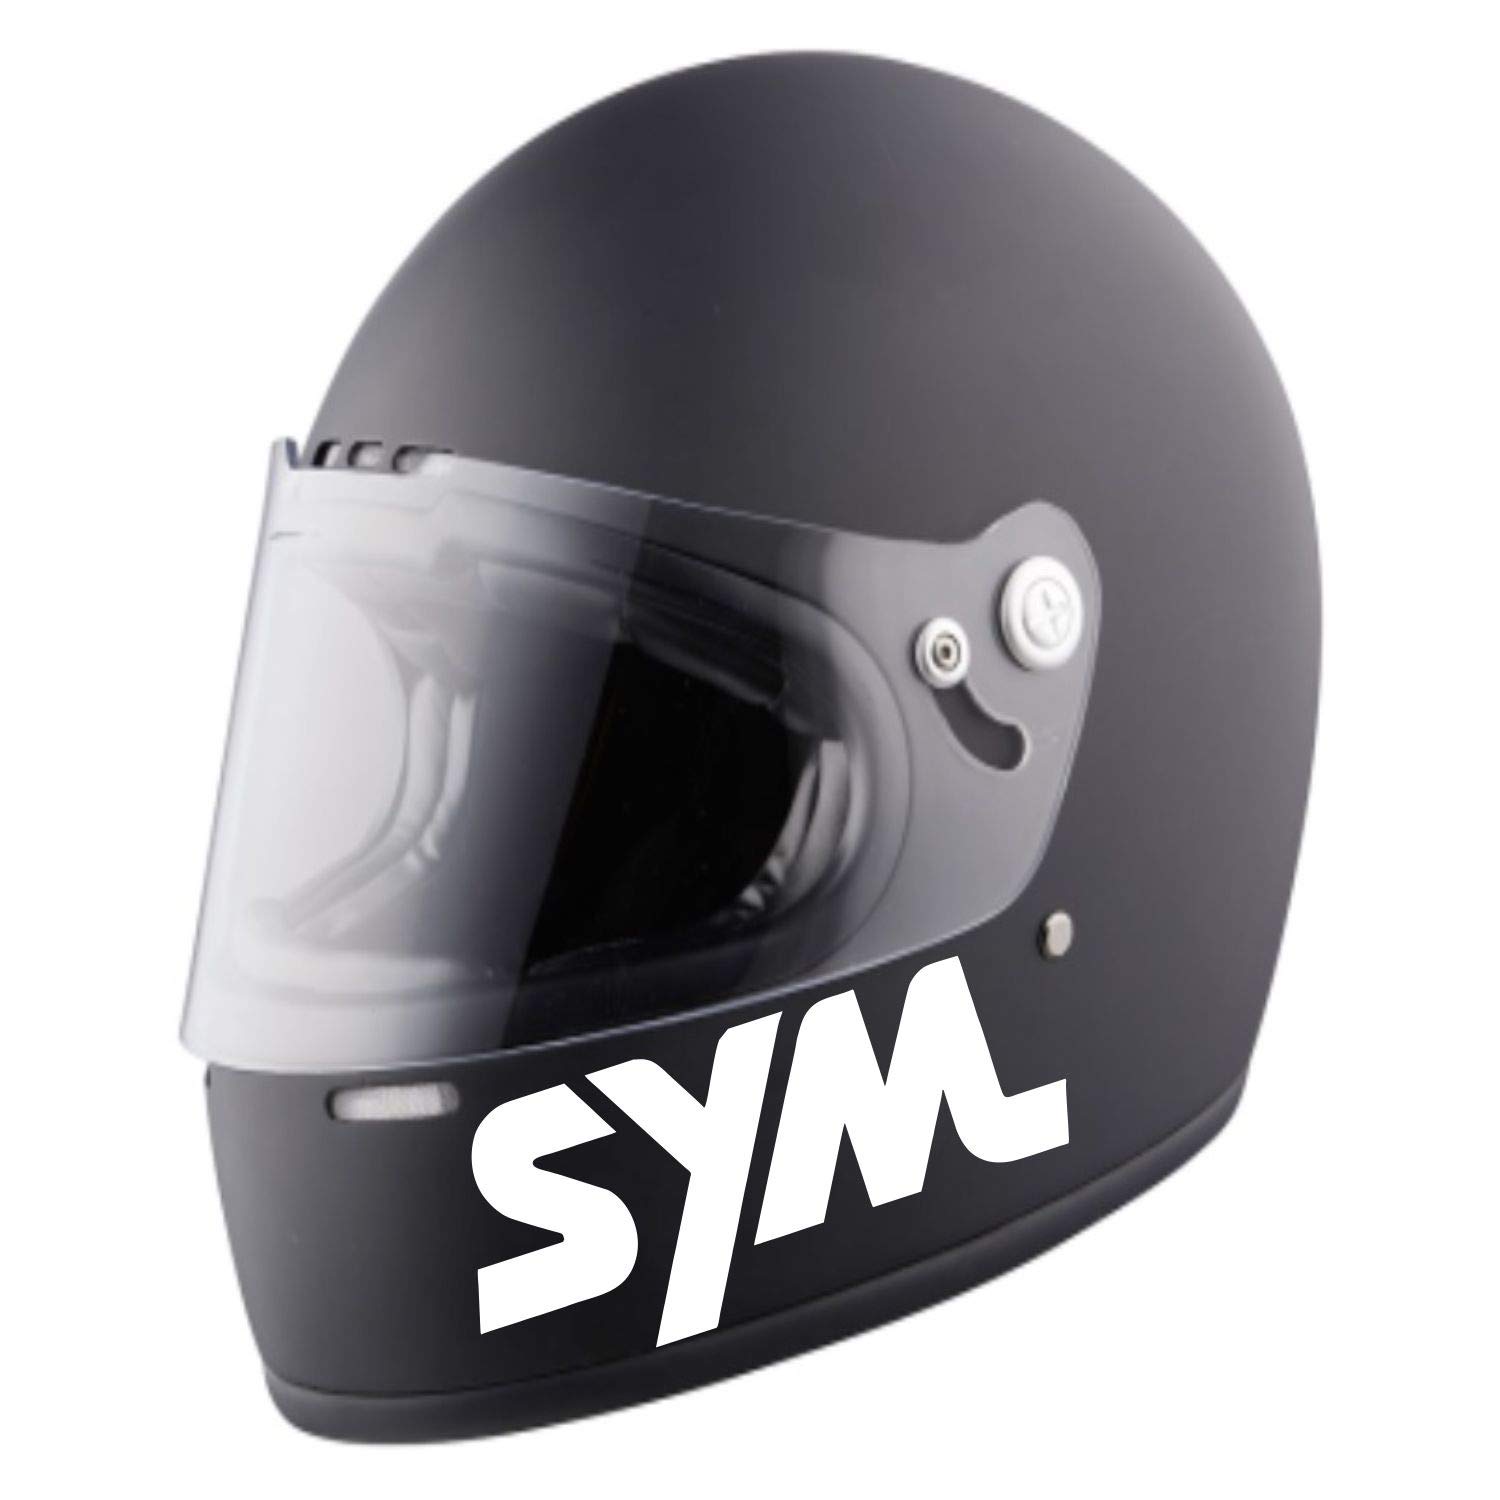 myrockshirt 2X Sym Schriftzug Helmaufkleber Aufkleber für Motorrad Bike Roller Mofa Sticker Decal Tuningaufkleber von myrockshirt